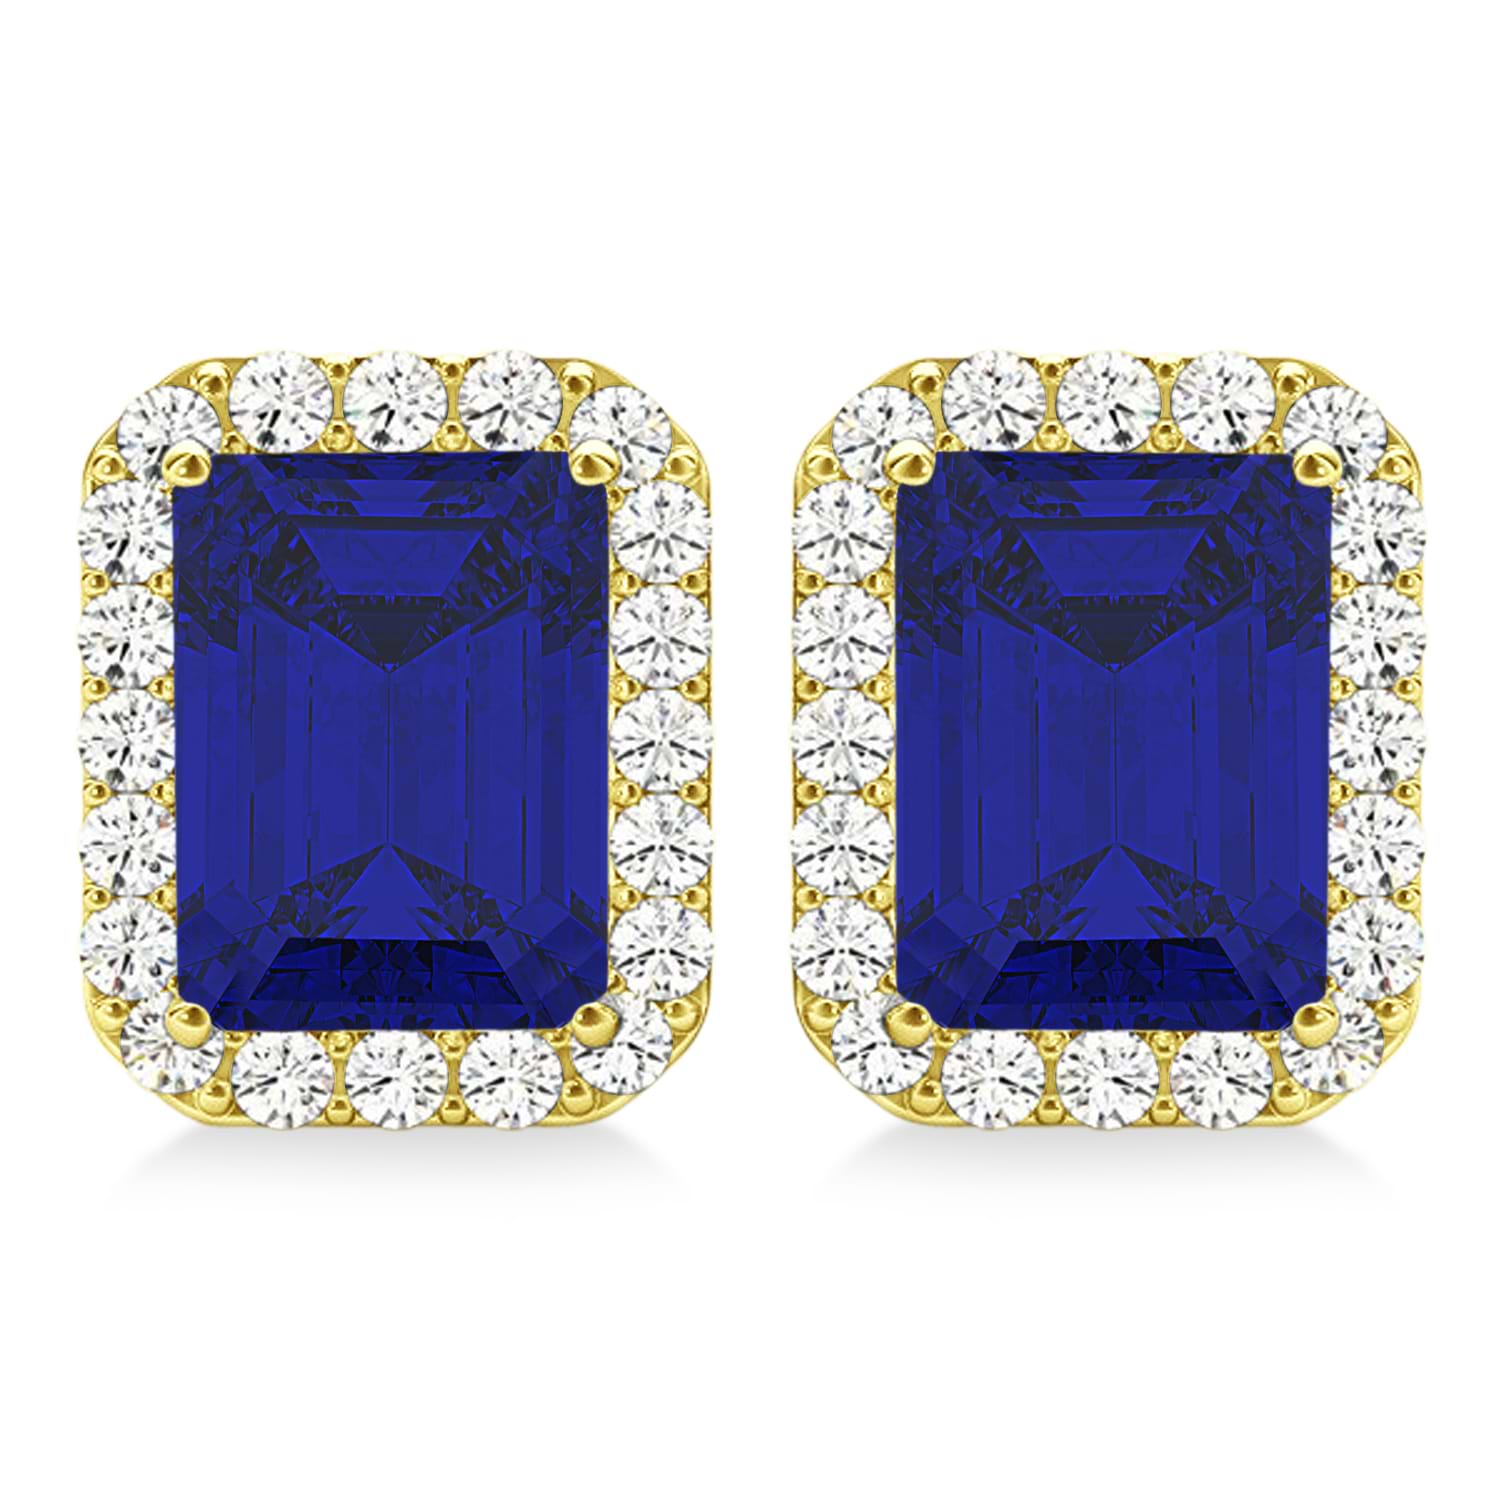 Emerald Cut Lab Blue Sapphire & Diamond Halo Earrings 14k Yellow Gold (2.60ct)